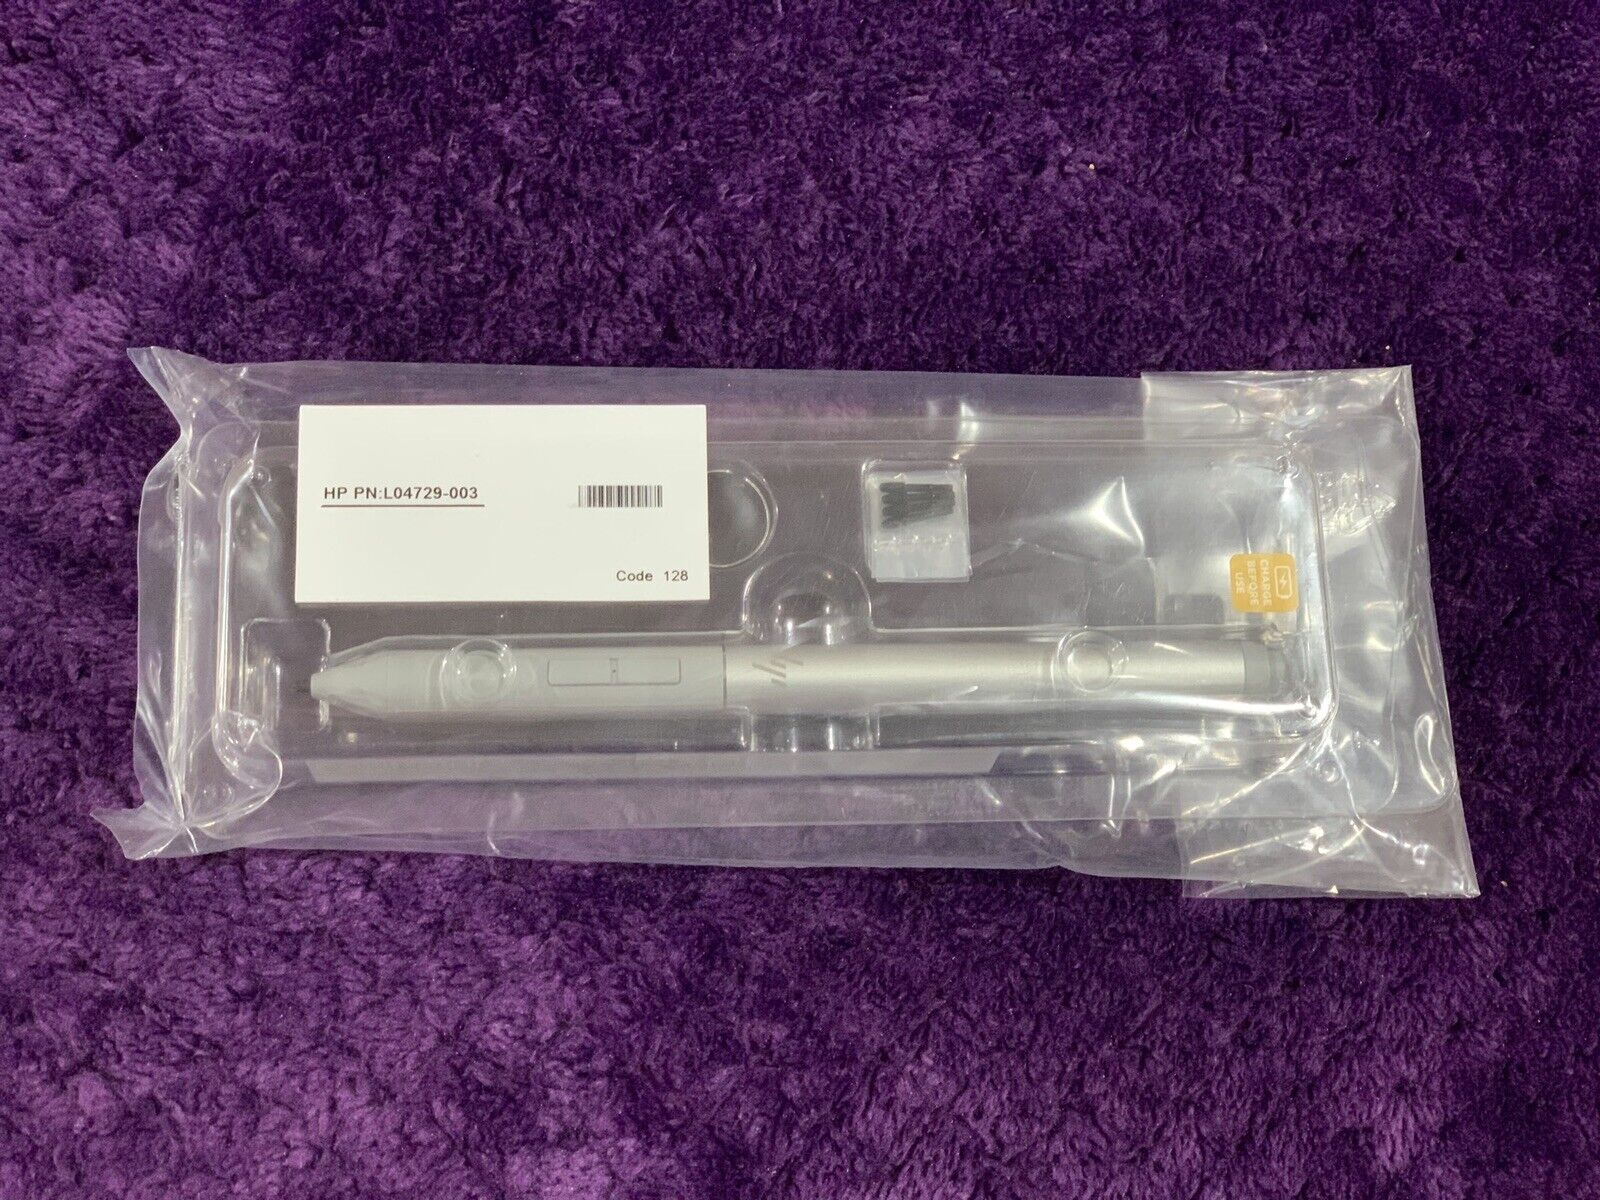 Genuine G3 Stylus Pen HP Active Pen L04729-003 (Sealed in Plastic) Lot of 10